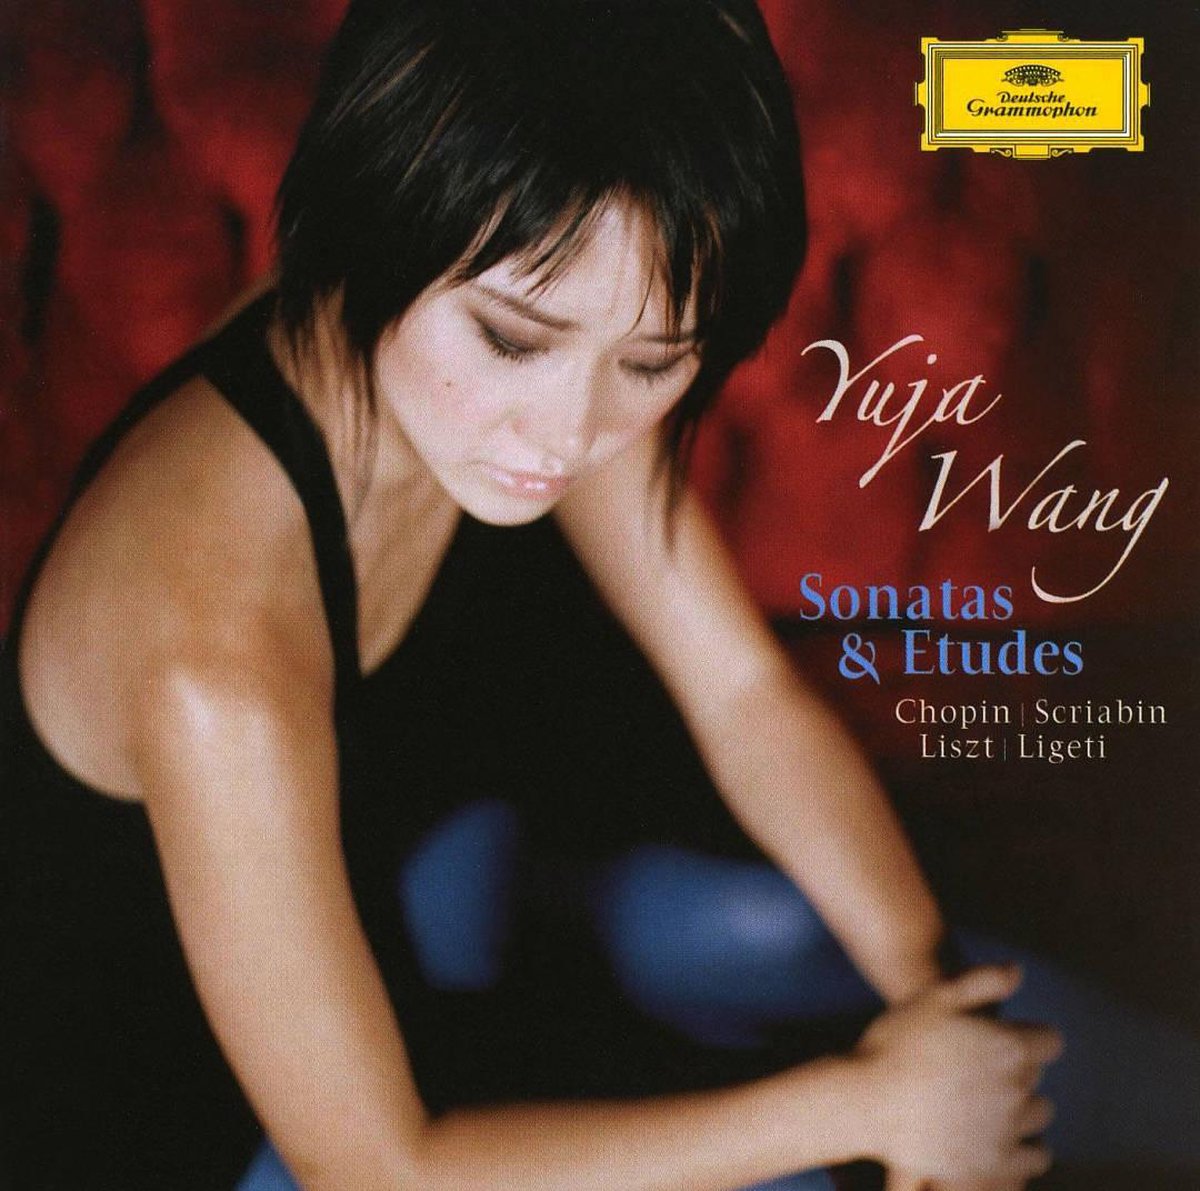 Sonatas & Etudes by Chopin, Scriabin, Liszt & Ligeti - Yuja Wang